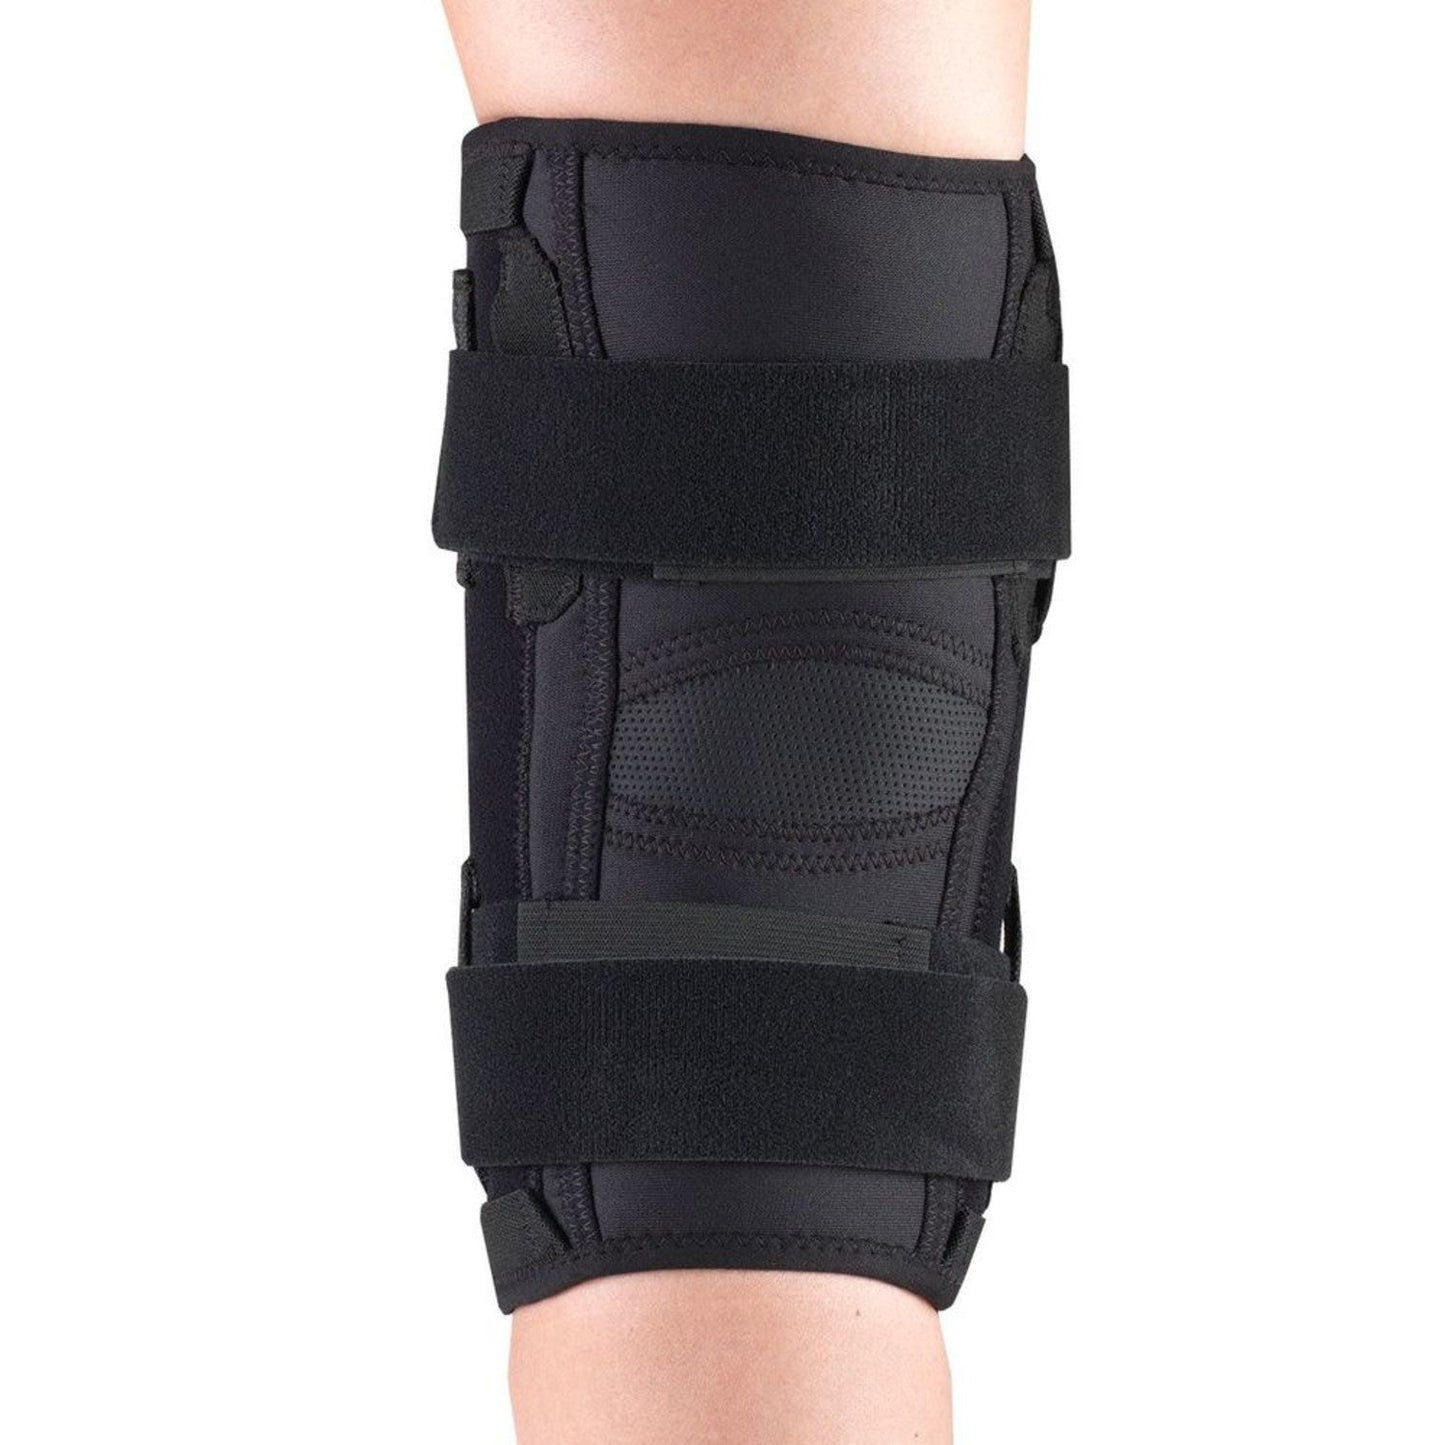 OTC Orthotex Knee Stabilizer Wrap - Hinged Bars, Back View